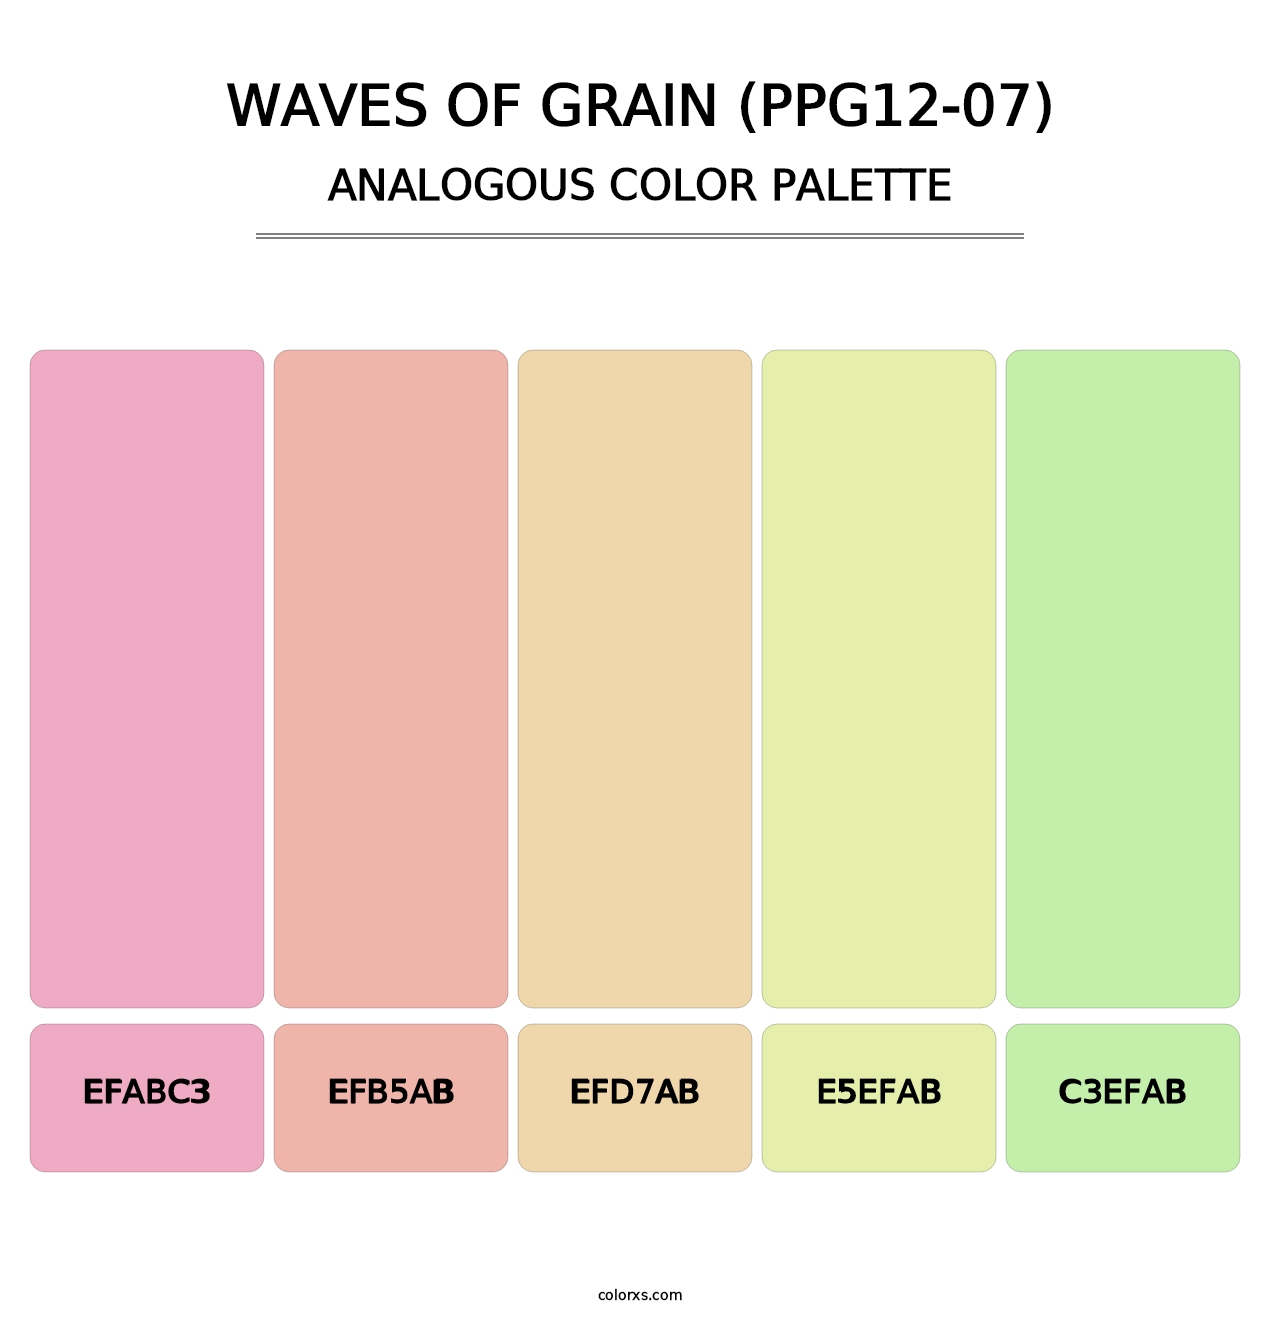 Waves Of Grain (PPG12-07) - Analogous Color Palette